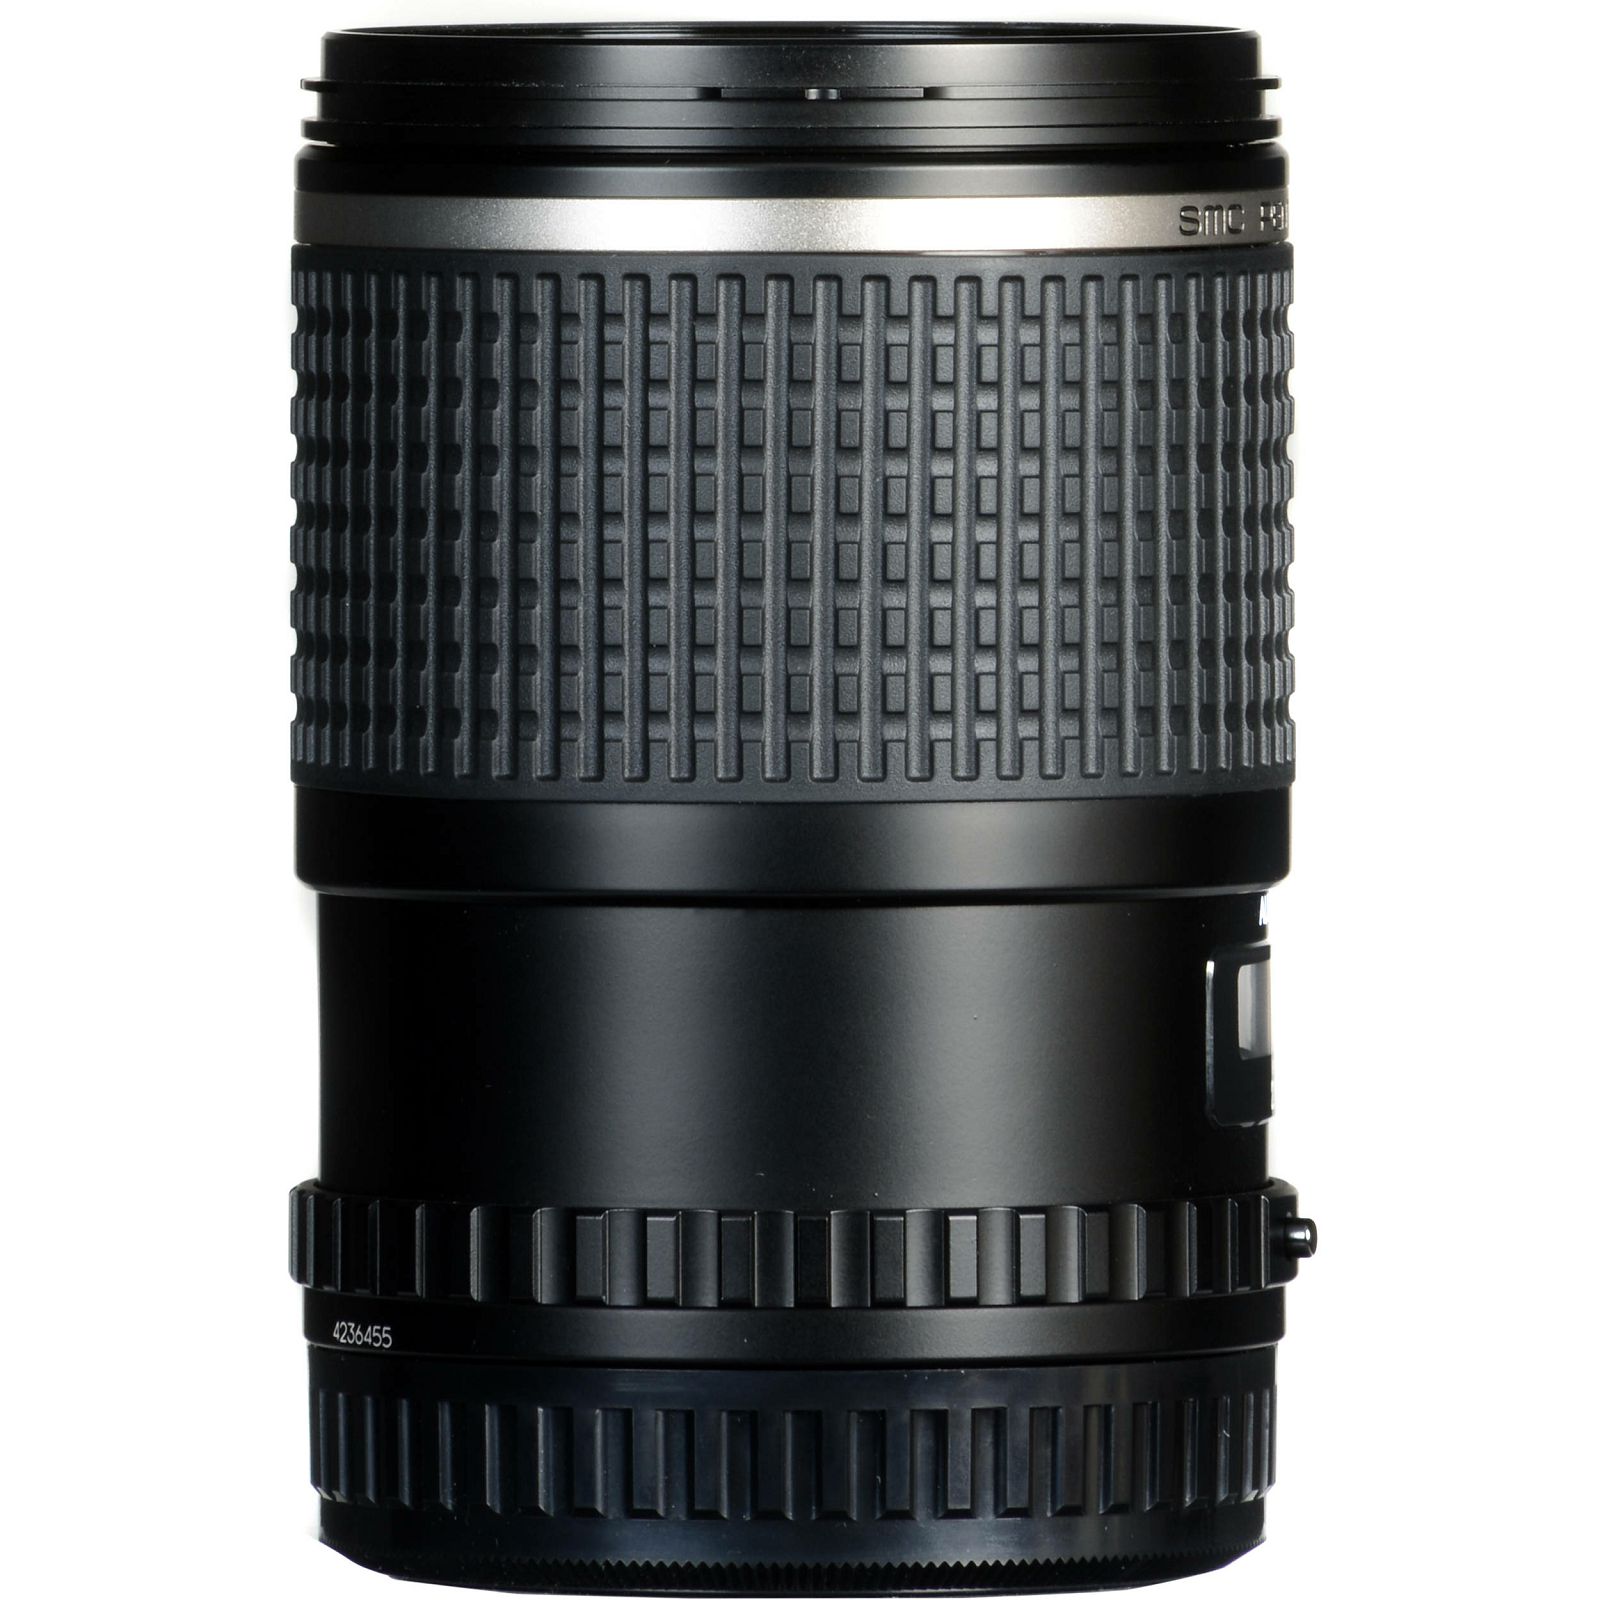 Pentax 150mm f/2.8 (IF) Telefoto objektiv fiksne žarišne duljine prime lens SMC FA 645 (26345)